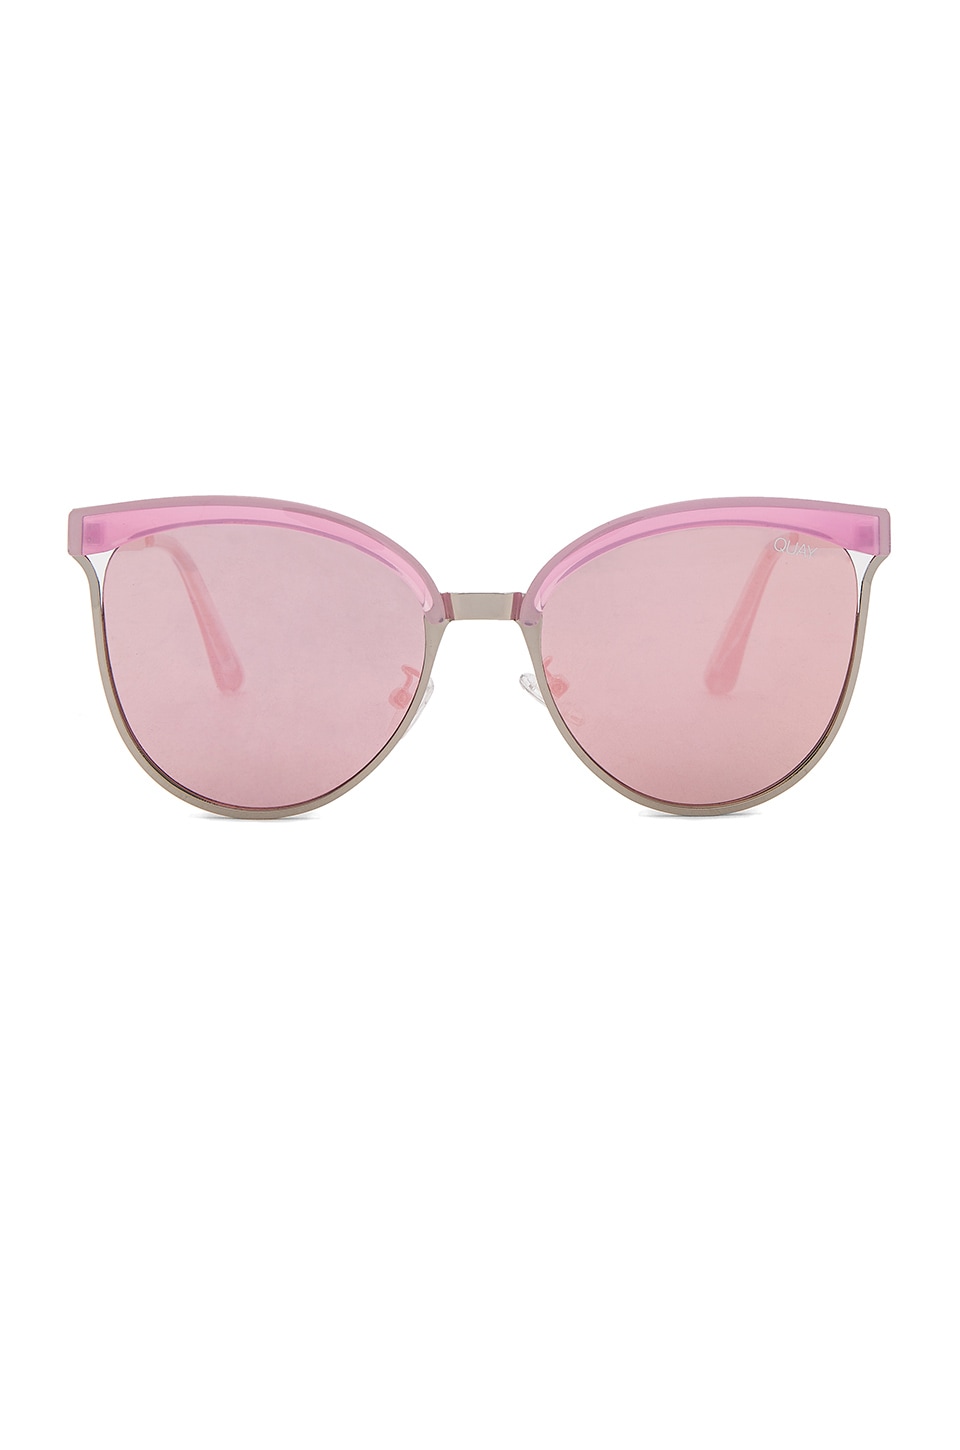 Quay Stardust Sunglasses in Pink & Pink Mirror | REVOLVE